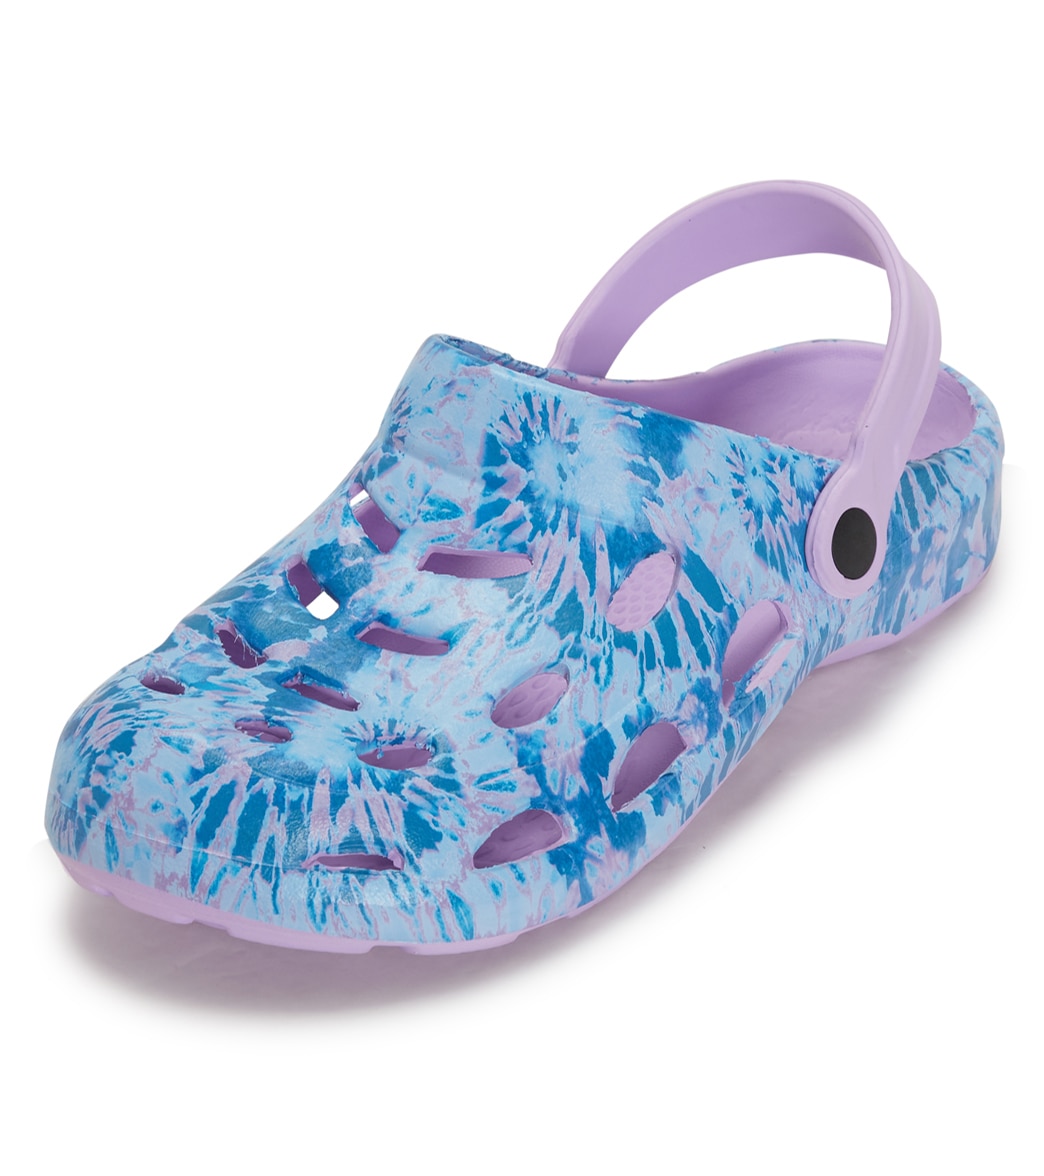 Northside Kid's Haven Slip On Shoes Shoes Waterproof Shoes Toddler/Little/Big Kid - Aqua/Lilac 10 - Swimoutlet.com